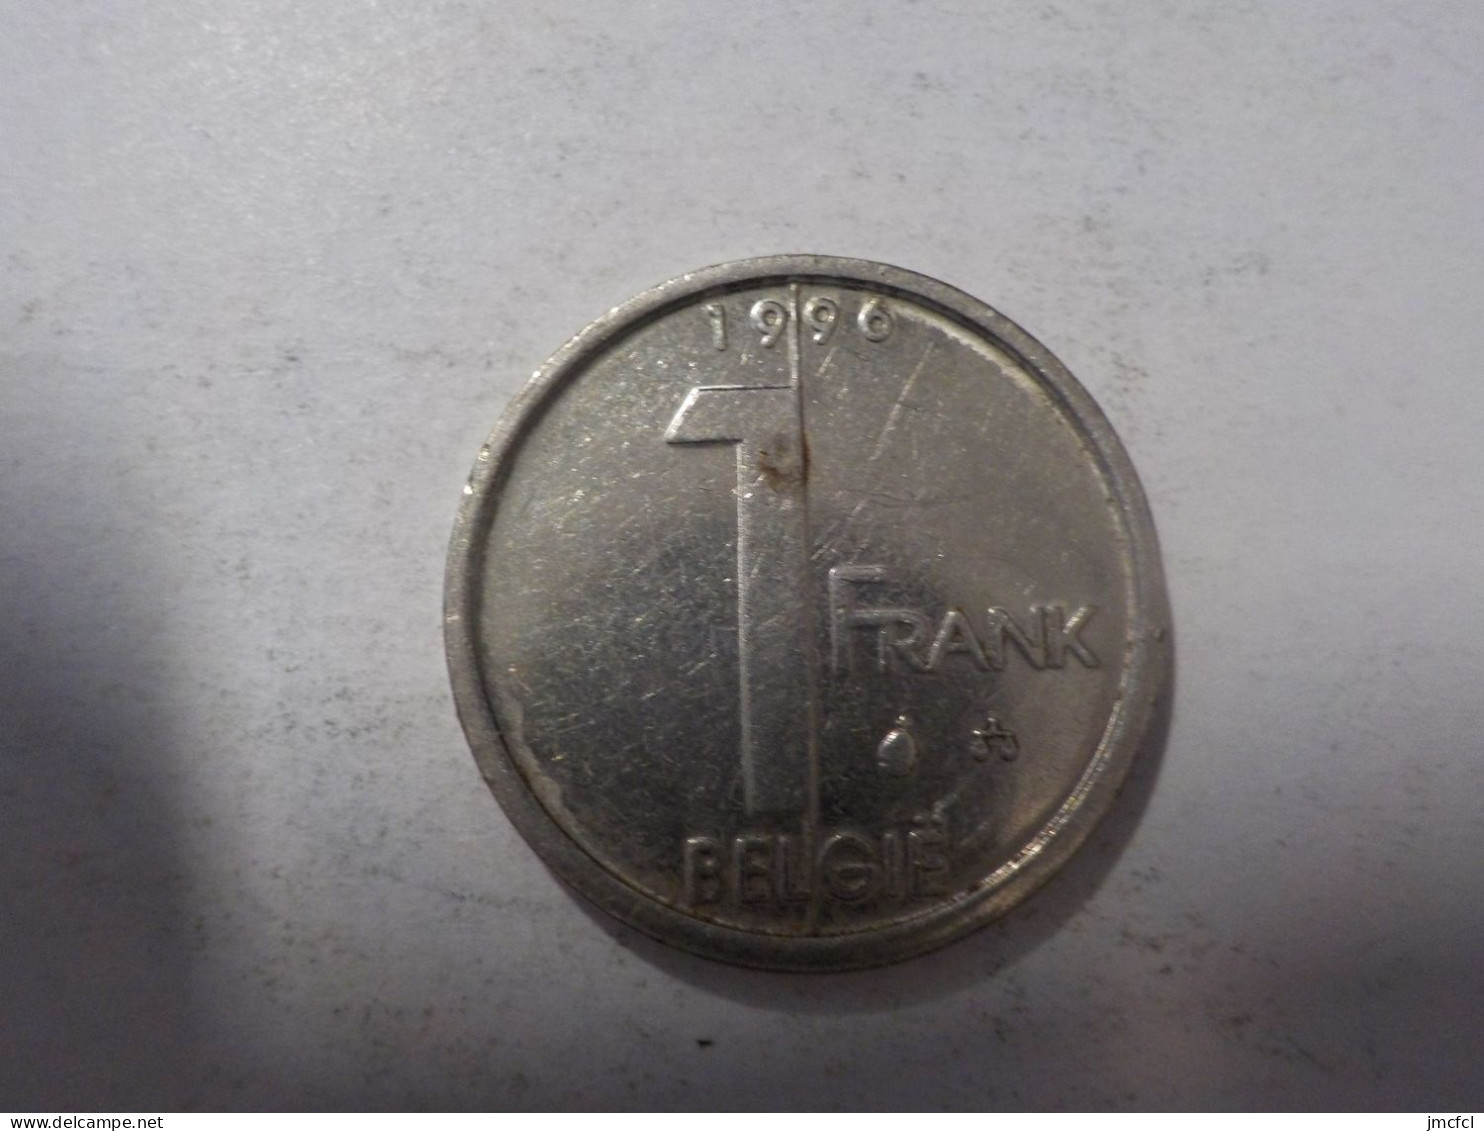 BELGIQUE 1 Frank 1996 - 1 Franc